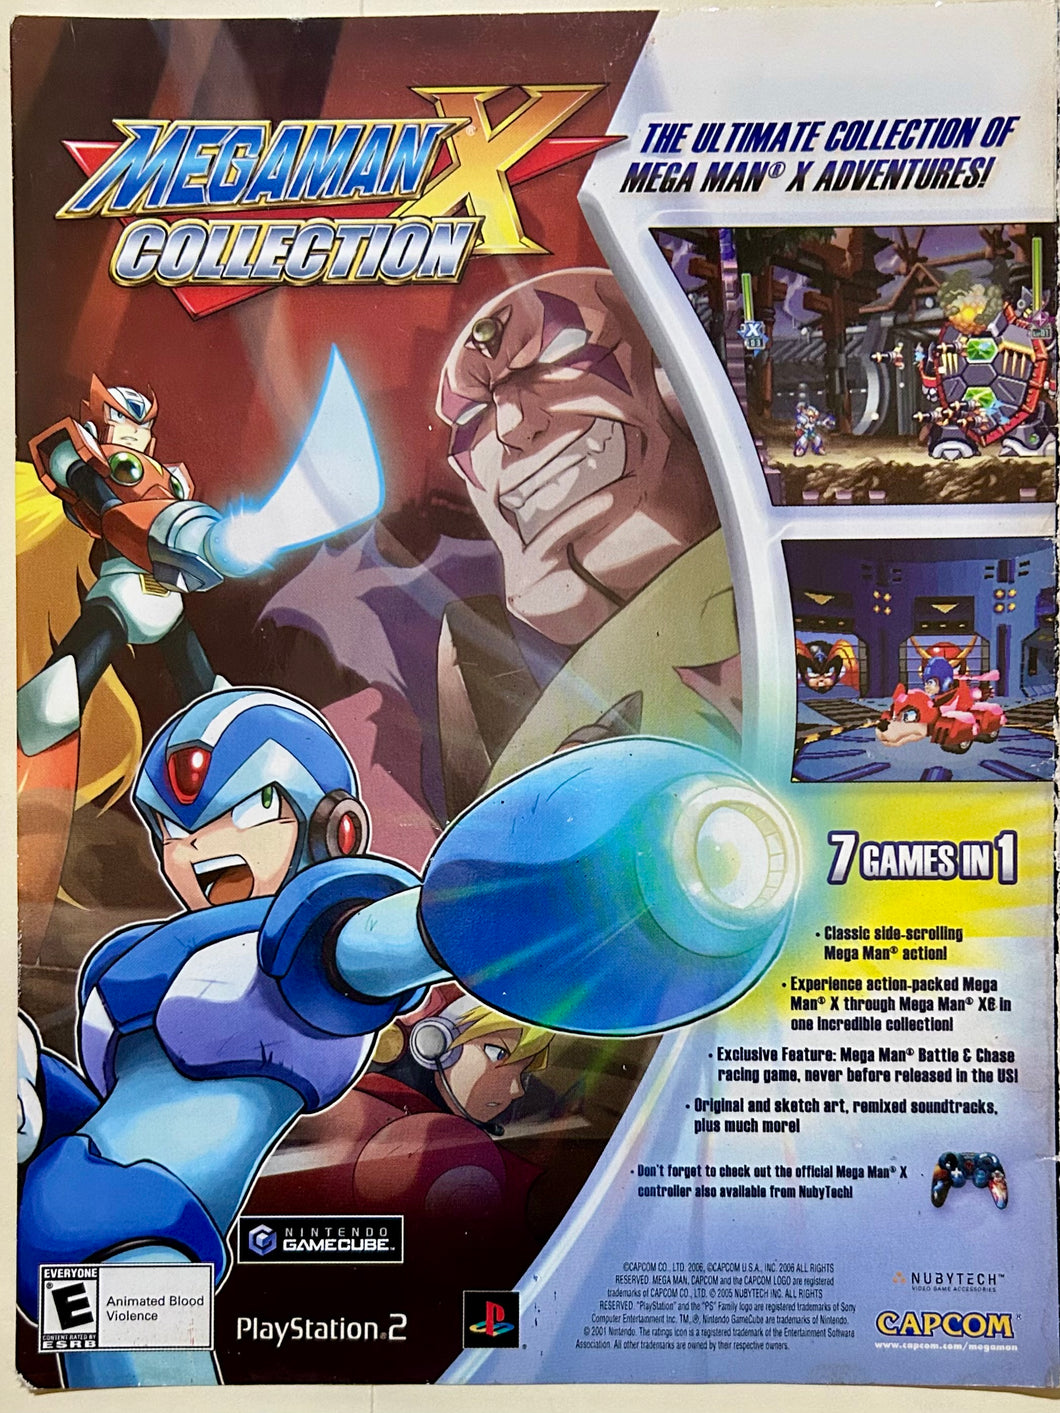 Megaman X Collection - PS2 NGC - Original Vintage Advertisement - Print Ads - Laminated A4 Poster